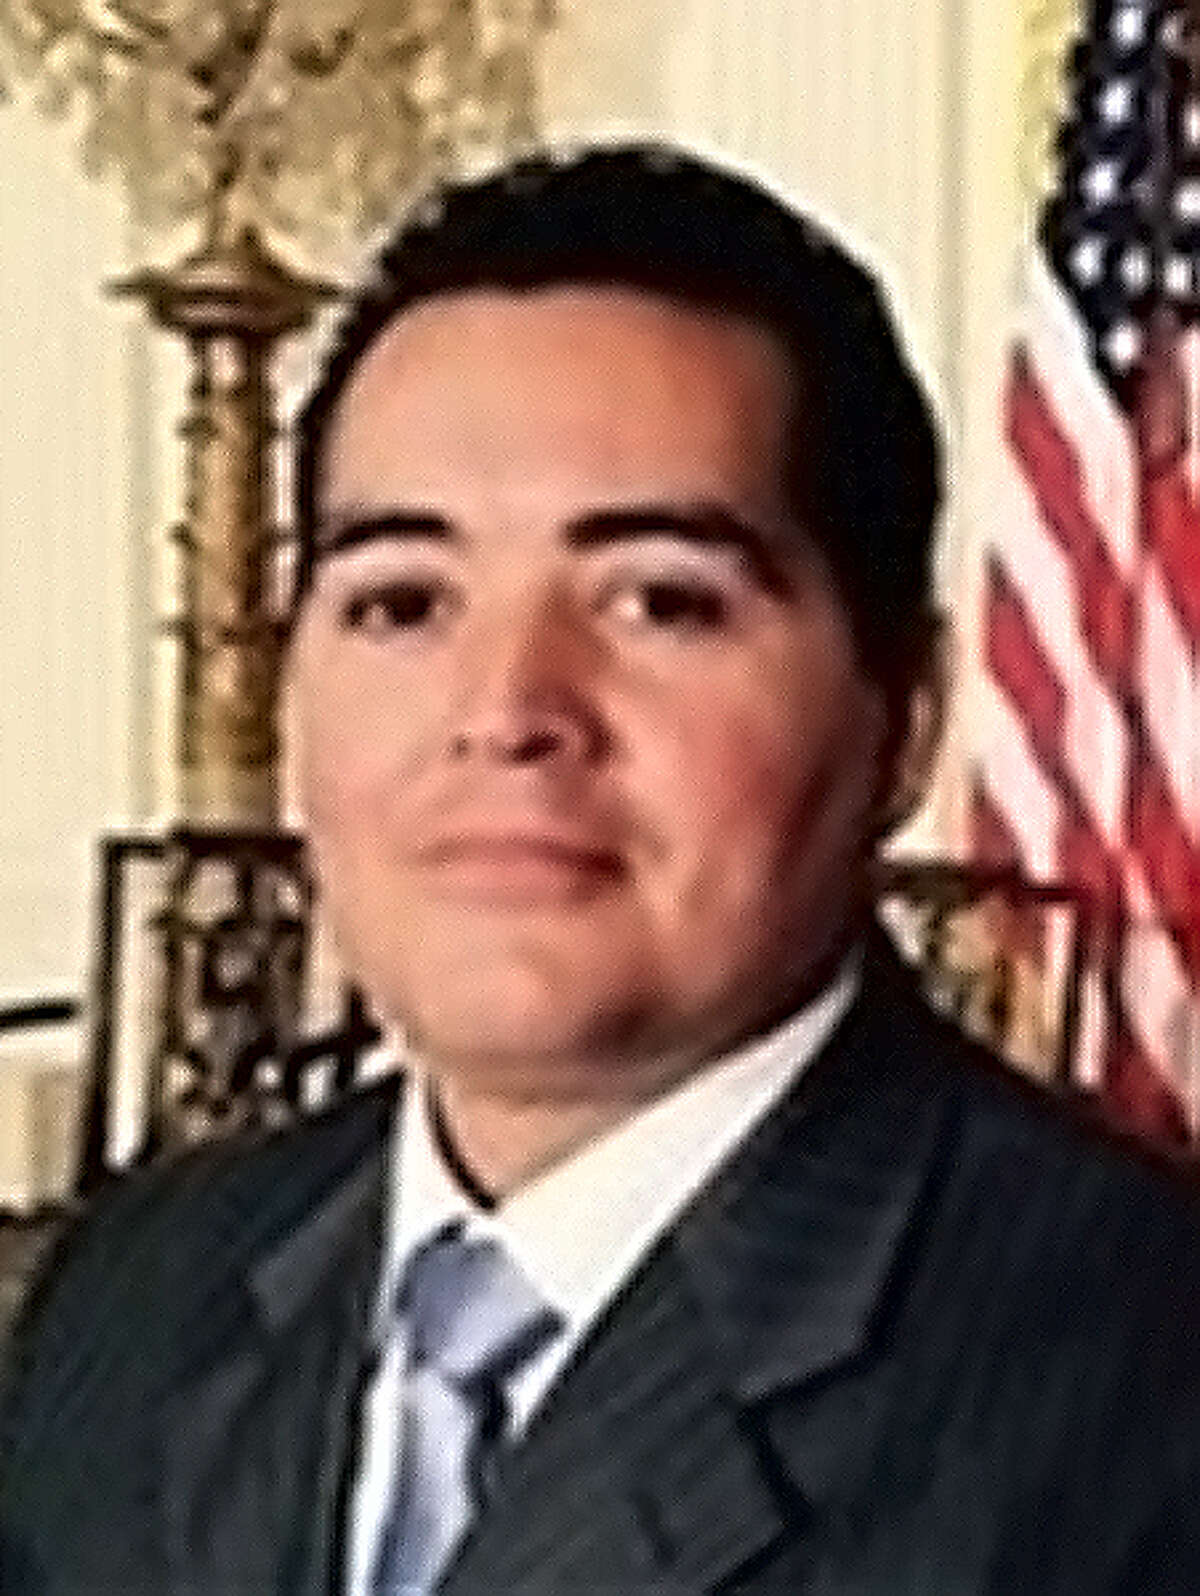 Crystal City Mayor Ricardo Lopez